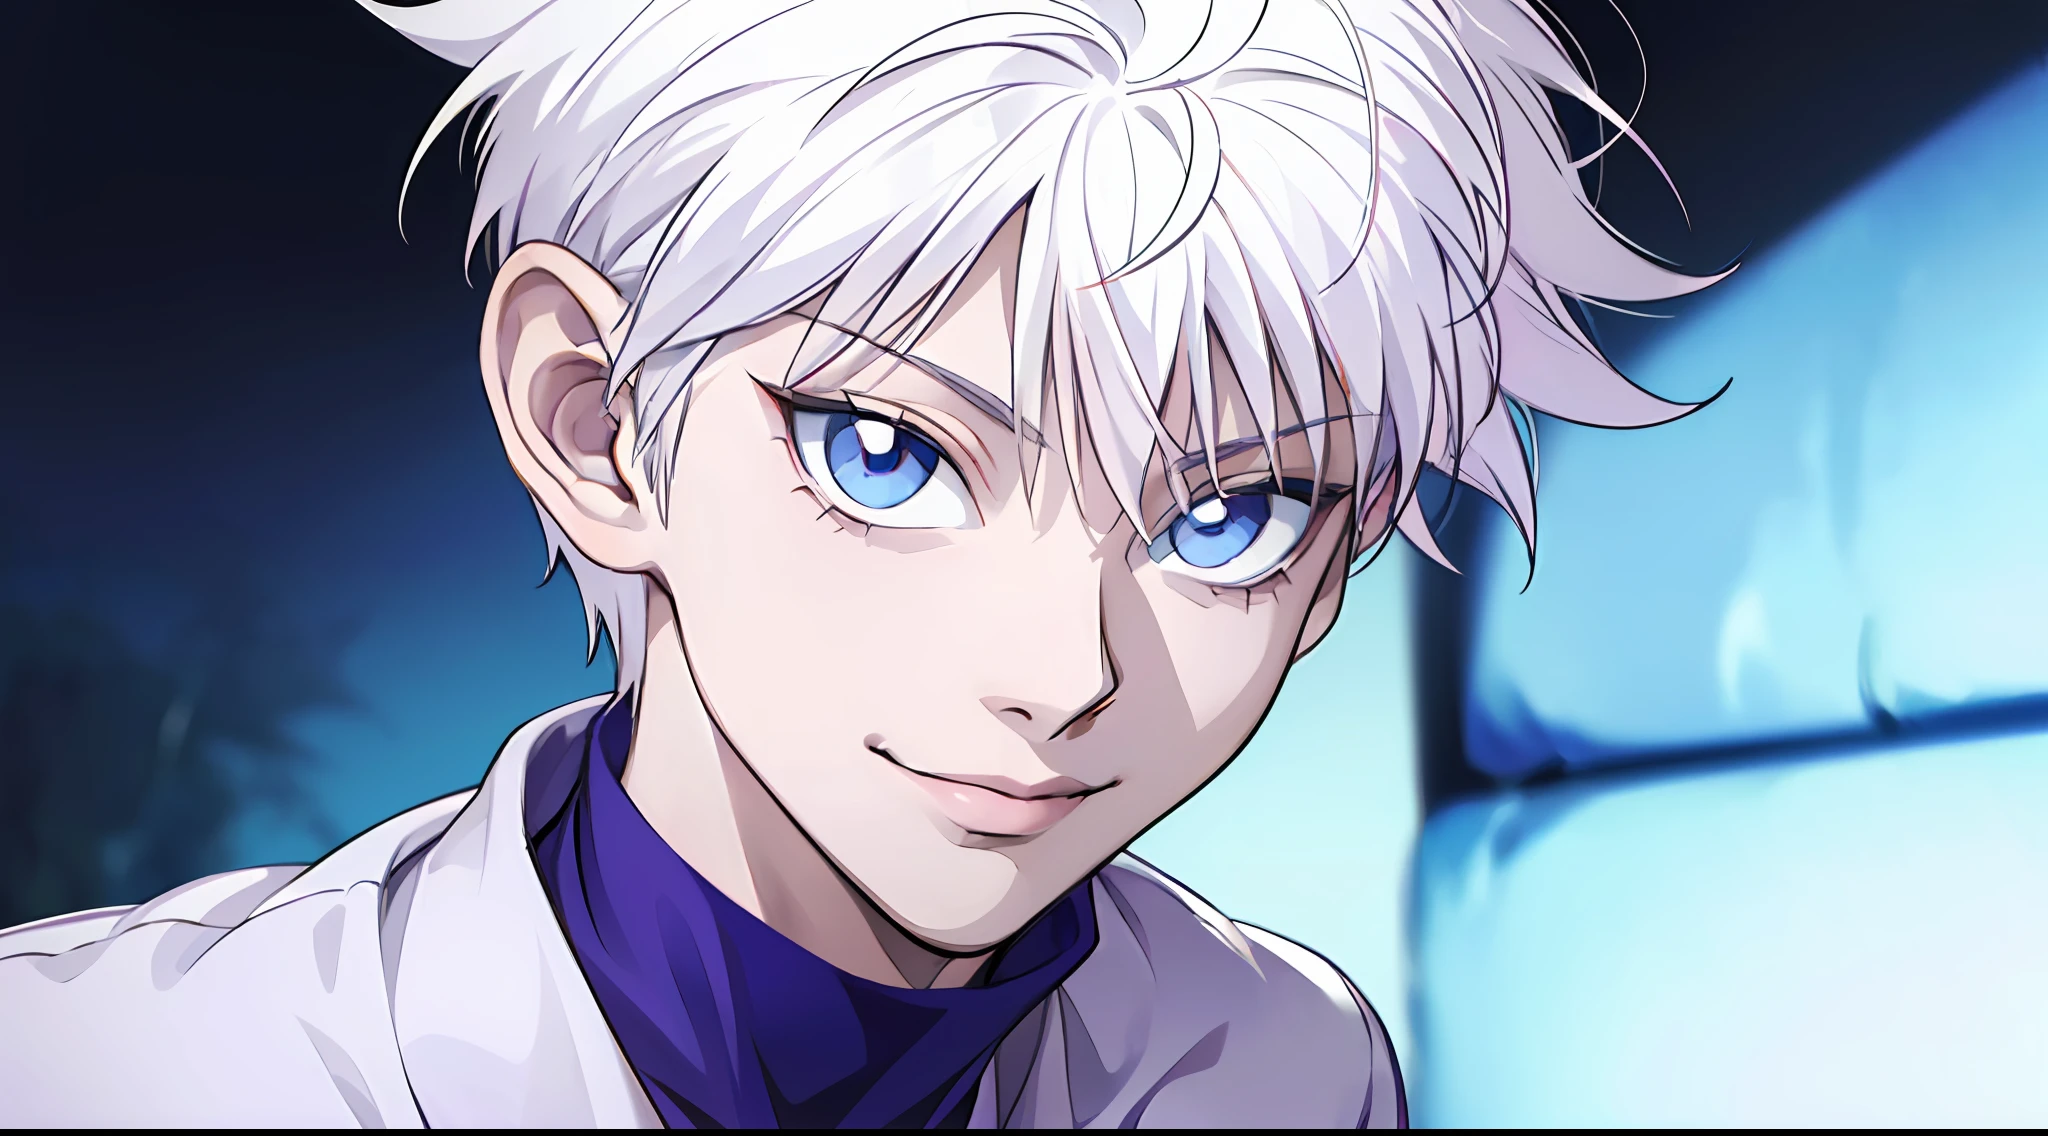 "(charachter: Killua, incredibly detailed portrait, dazzling smile, vibrant blue eyes, flawless white hair, elegant white shirt)"